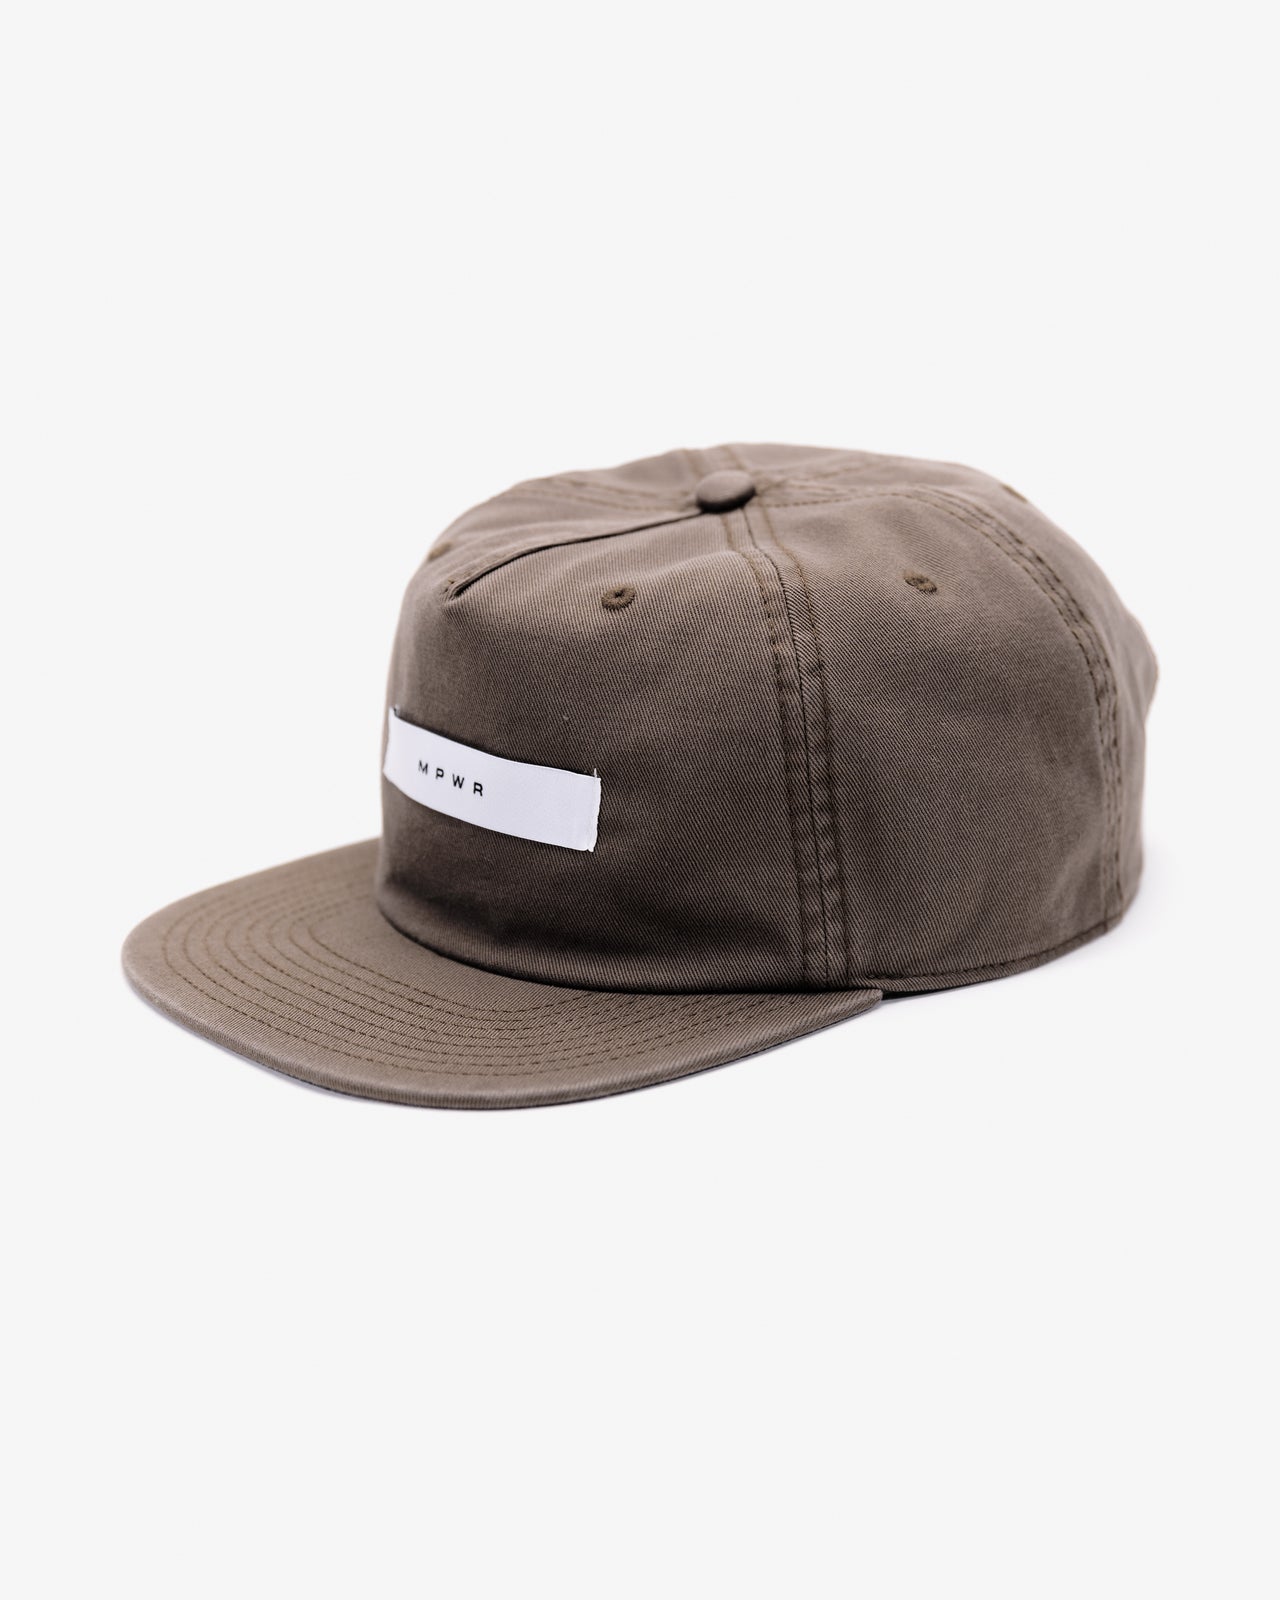 Label Hat - Brown